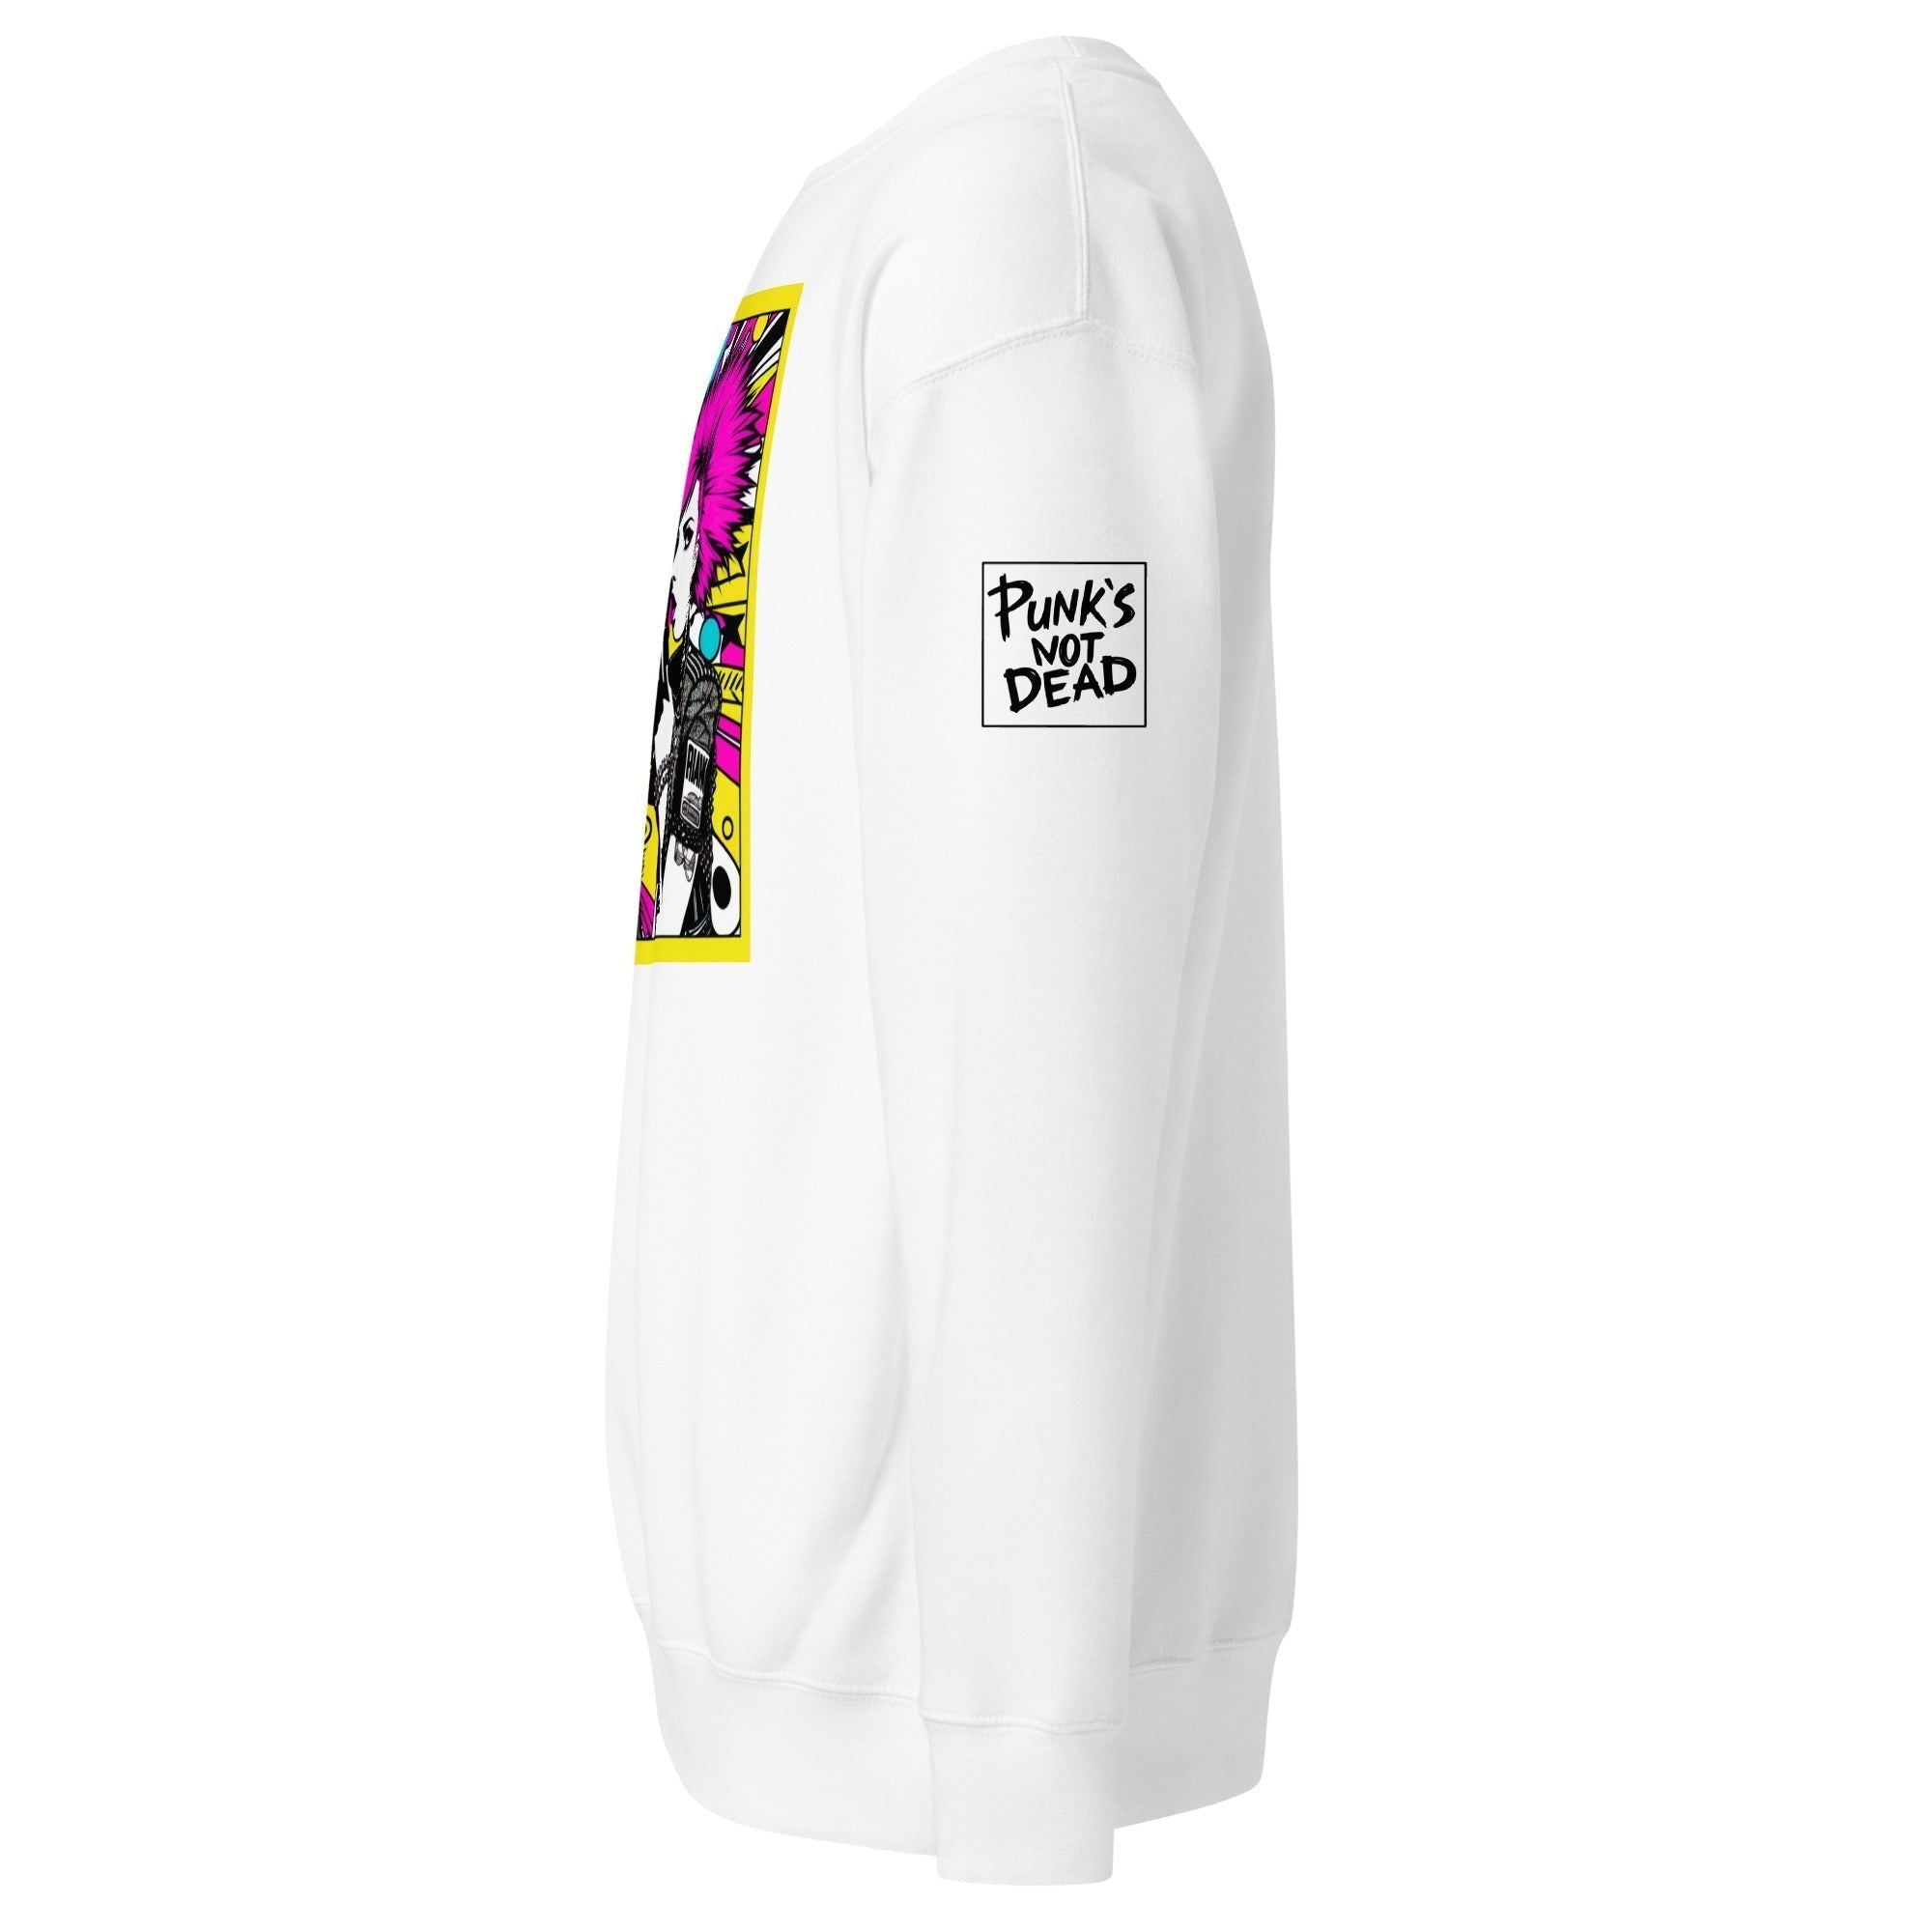 Unisex Premium Sweatshirt - Punk Pop Art Scene 19 - GRAPHIC T-SHIRTS